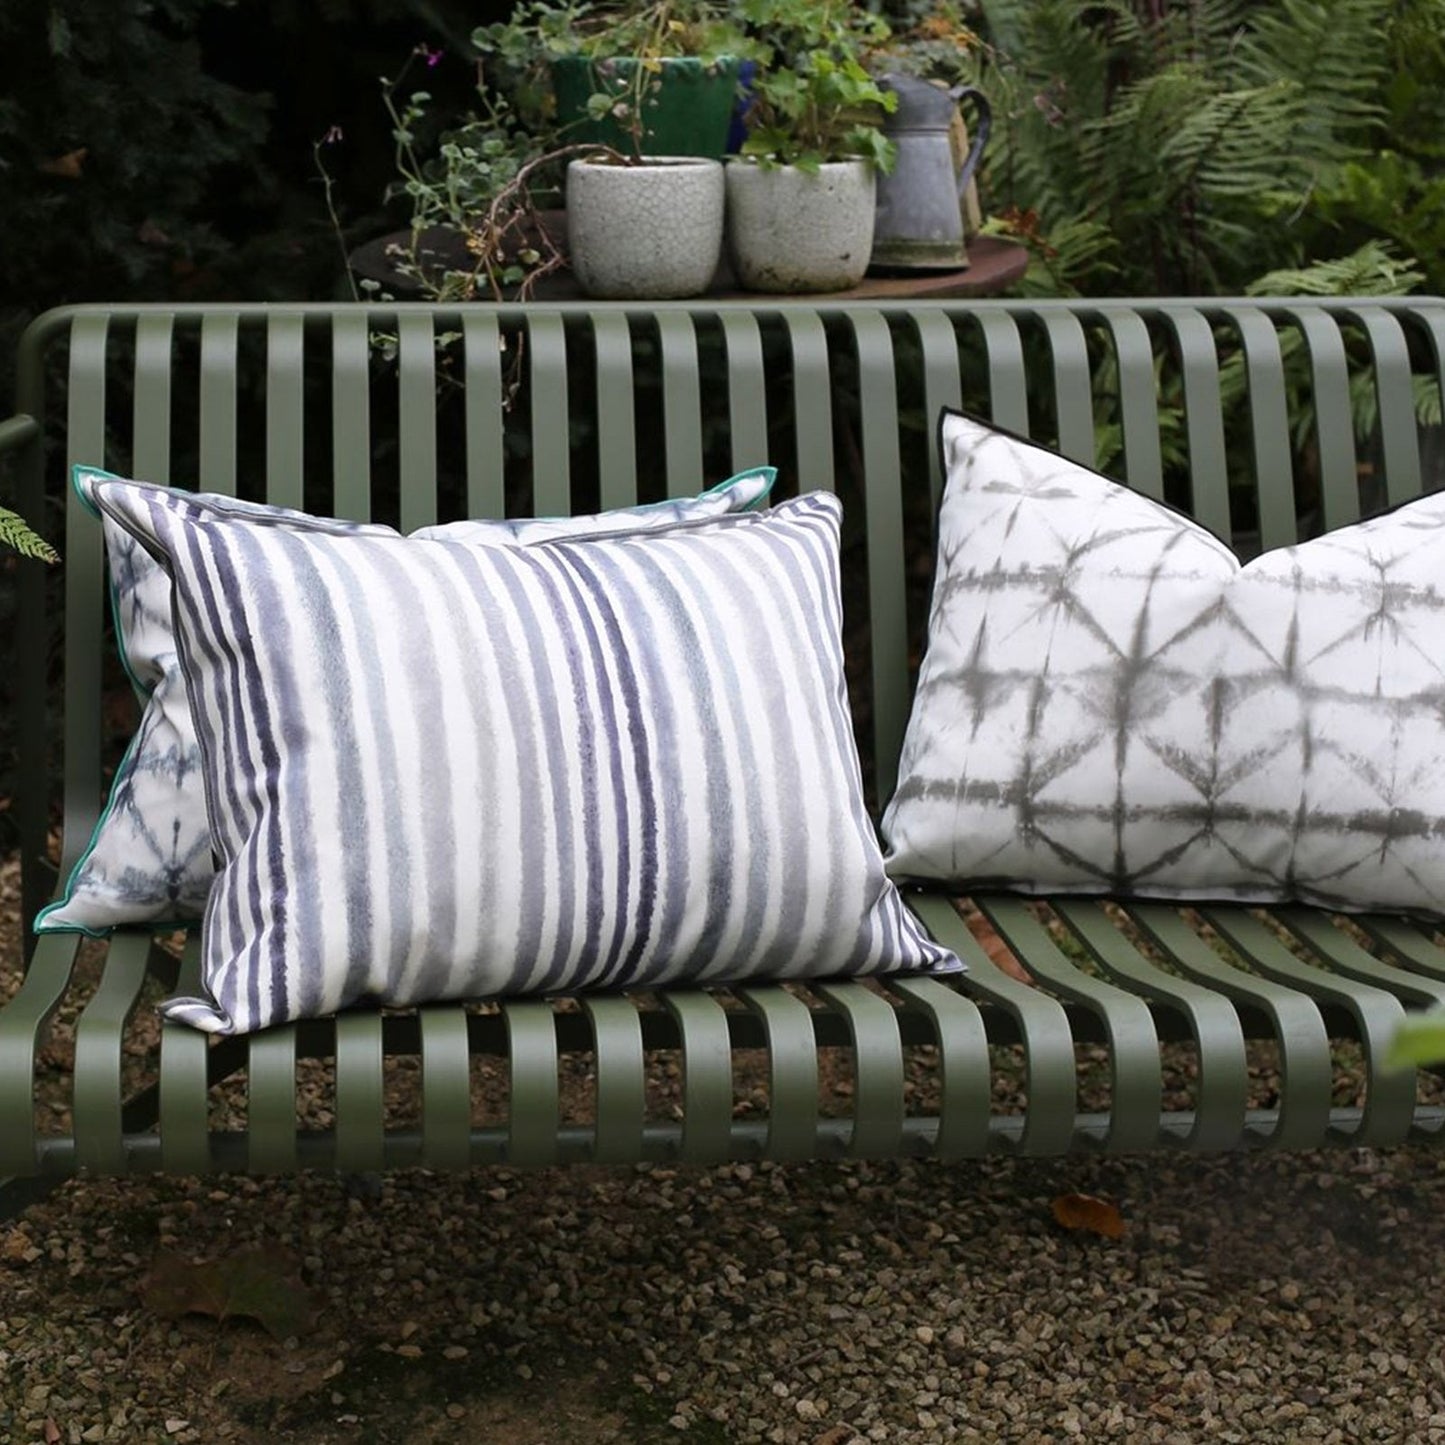 Outdoor Amlapura Rectangular Cushion, Black & White